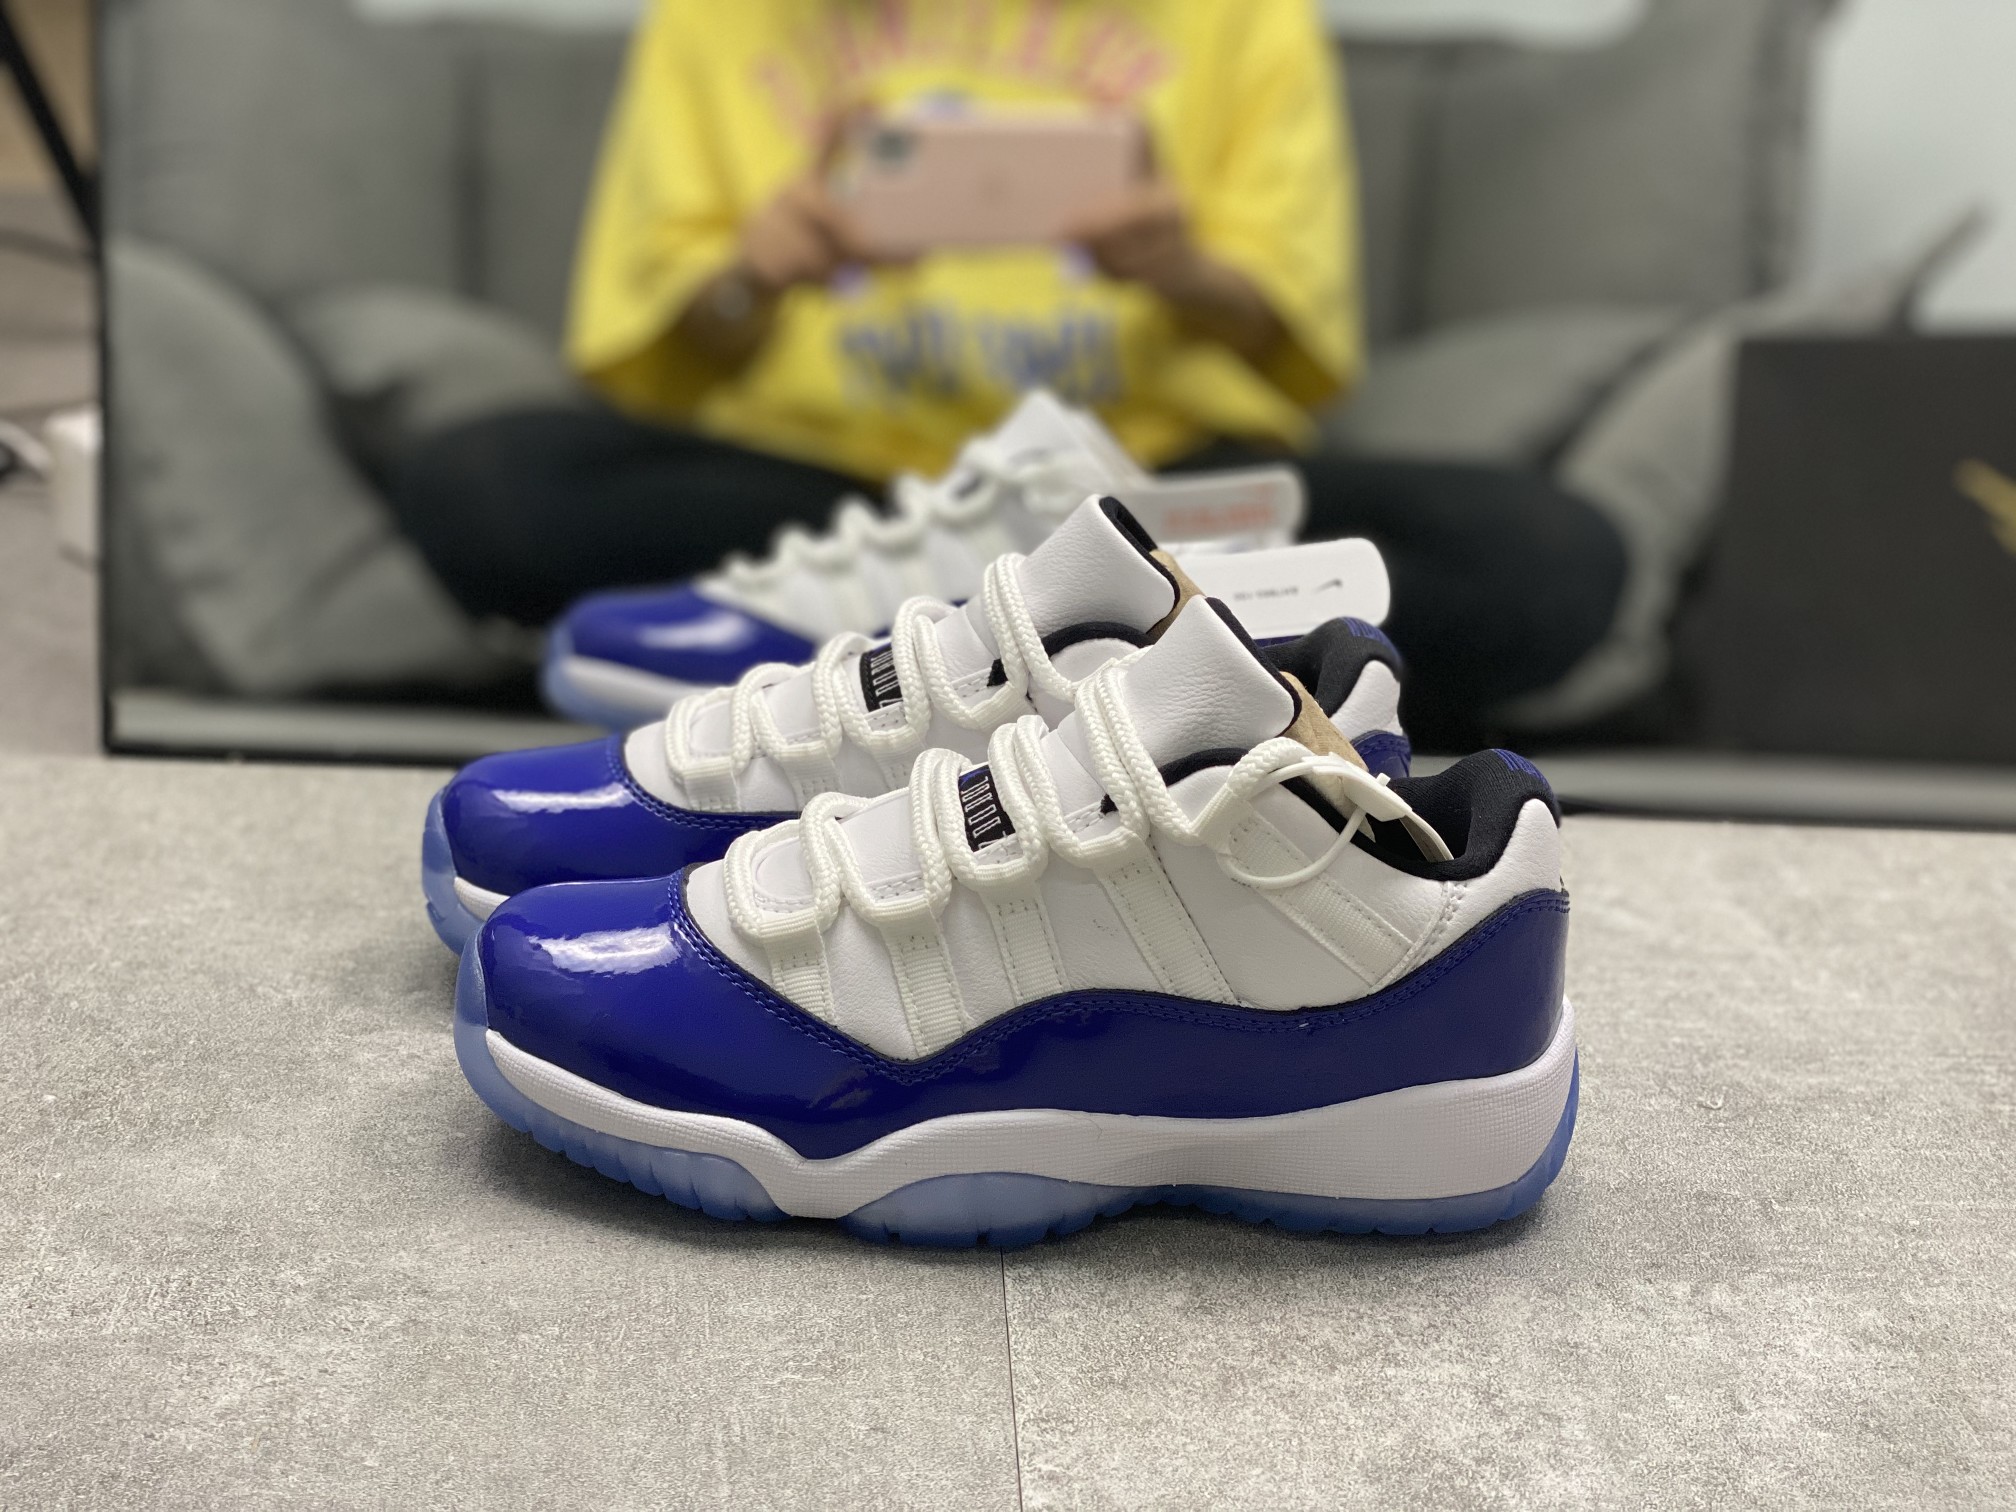 New Air Jordan 11 Low White Blue Women